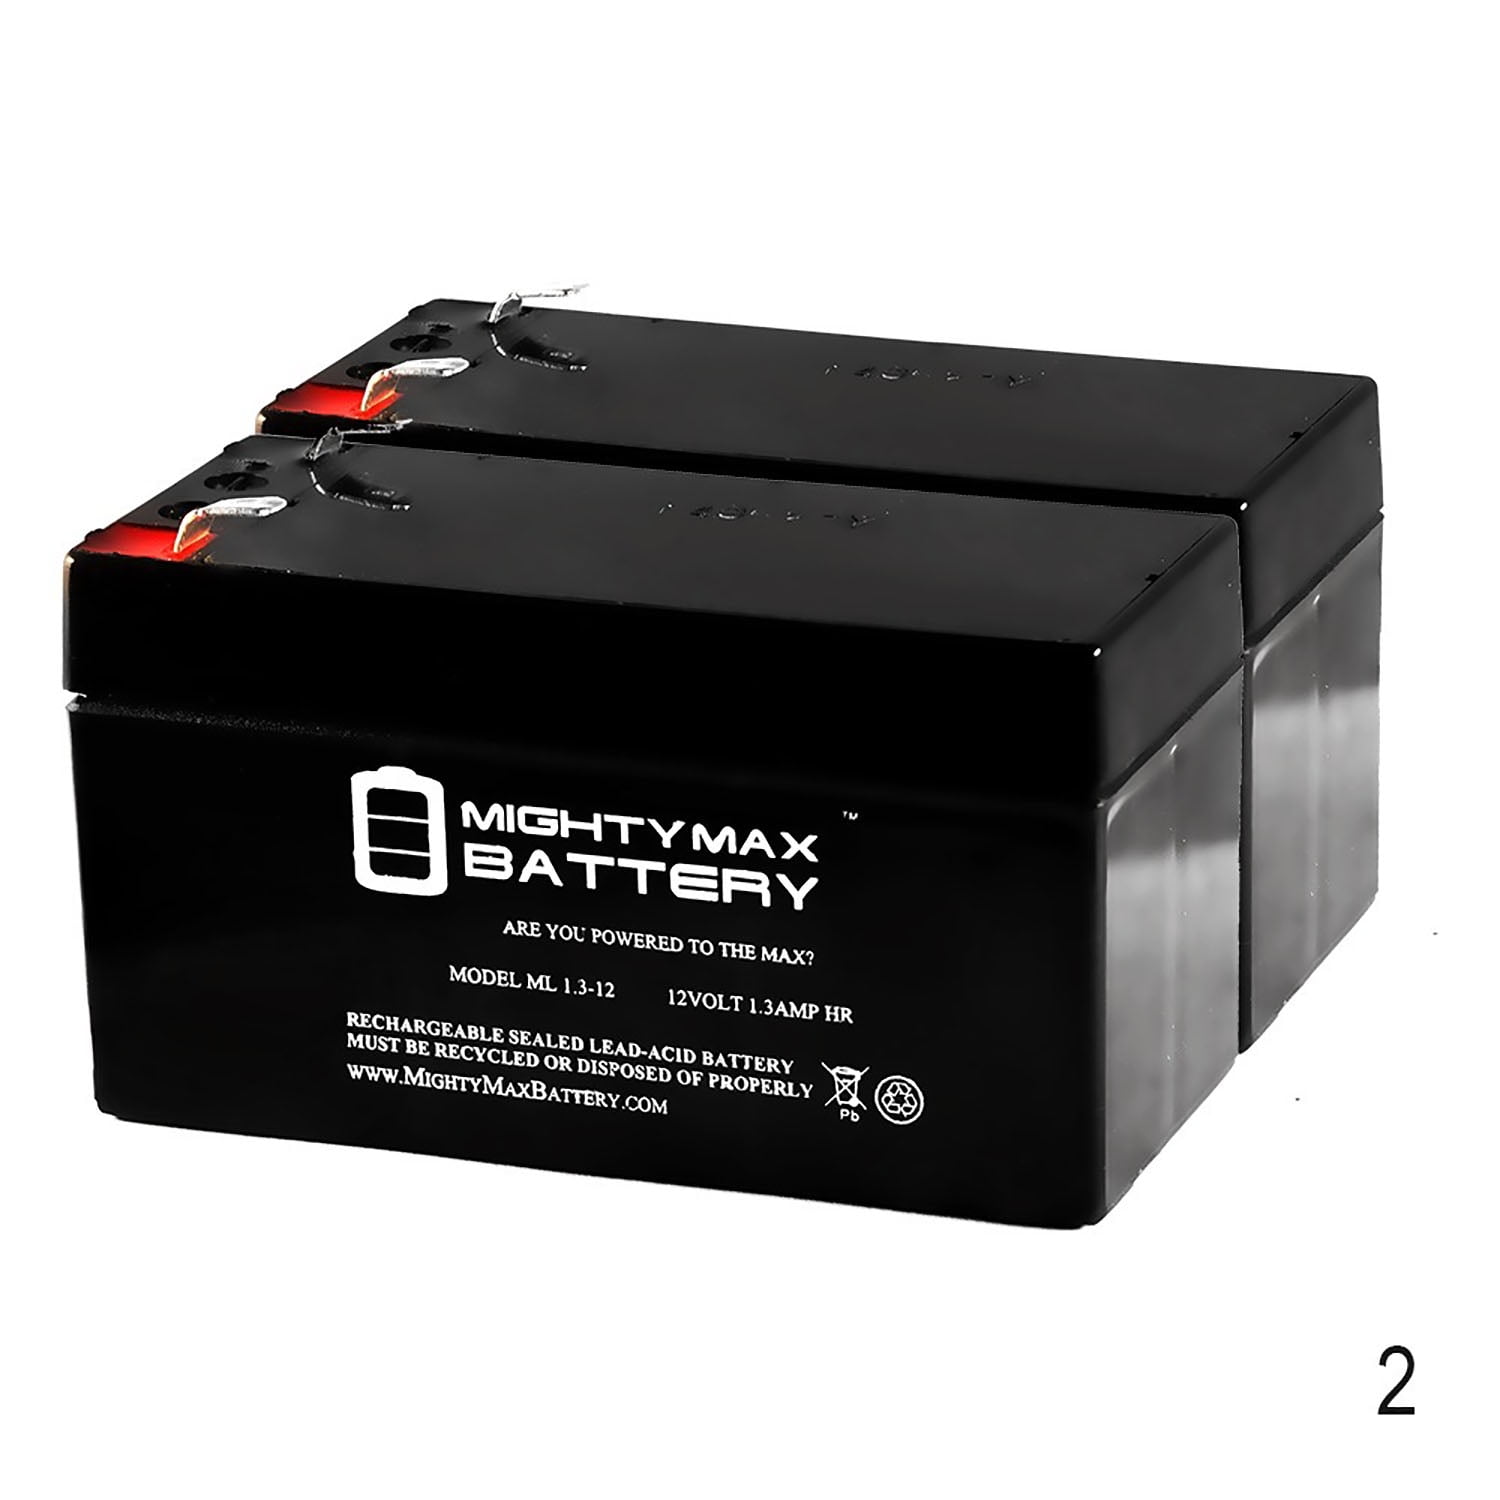 1.3 ah. Portalac аккумуляторы RXL 12023 12v 2,3ah. Sealed lead acid Battery. Non-Spillable аккумулятор.